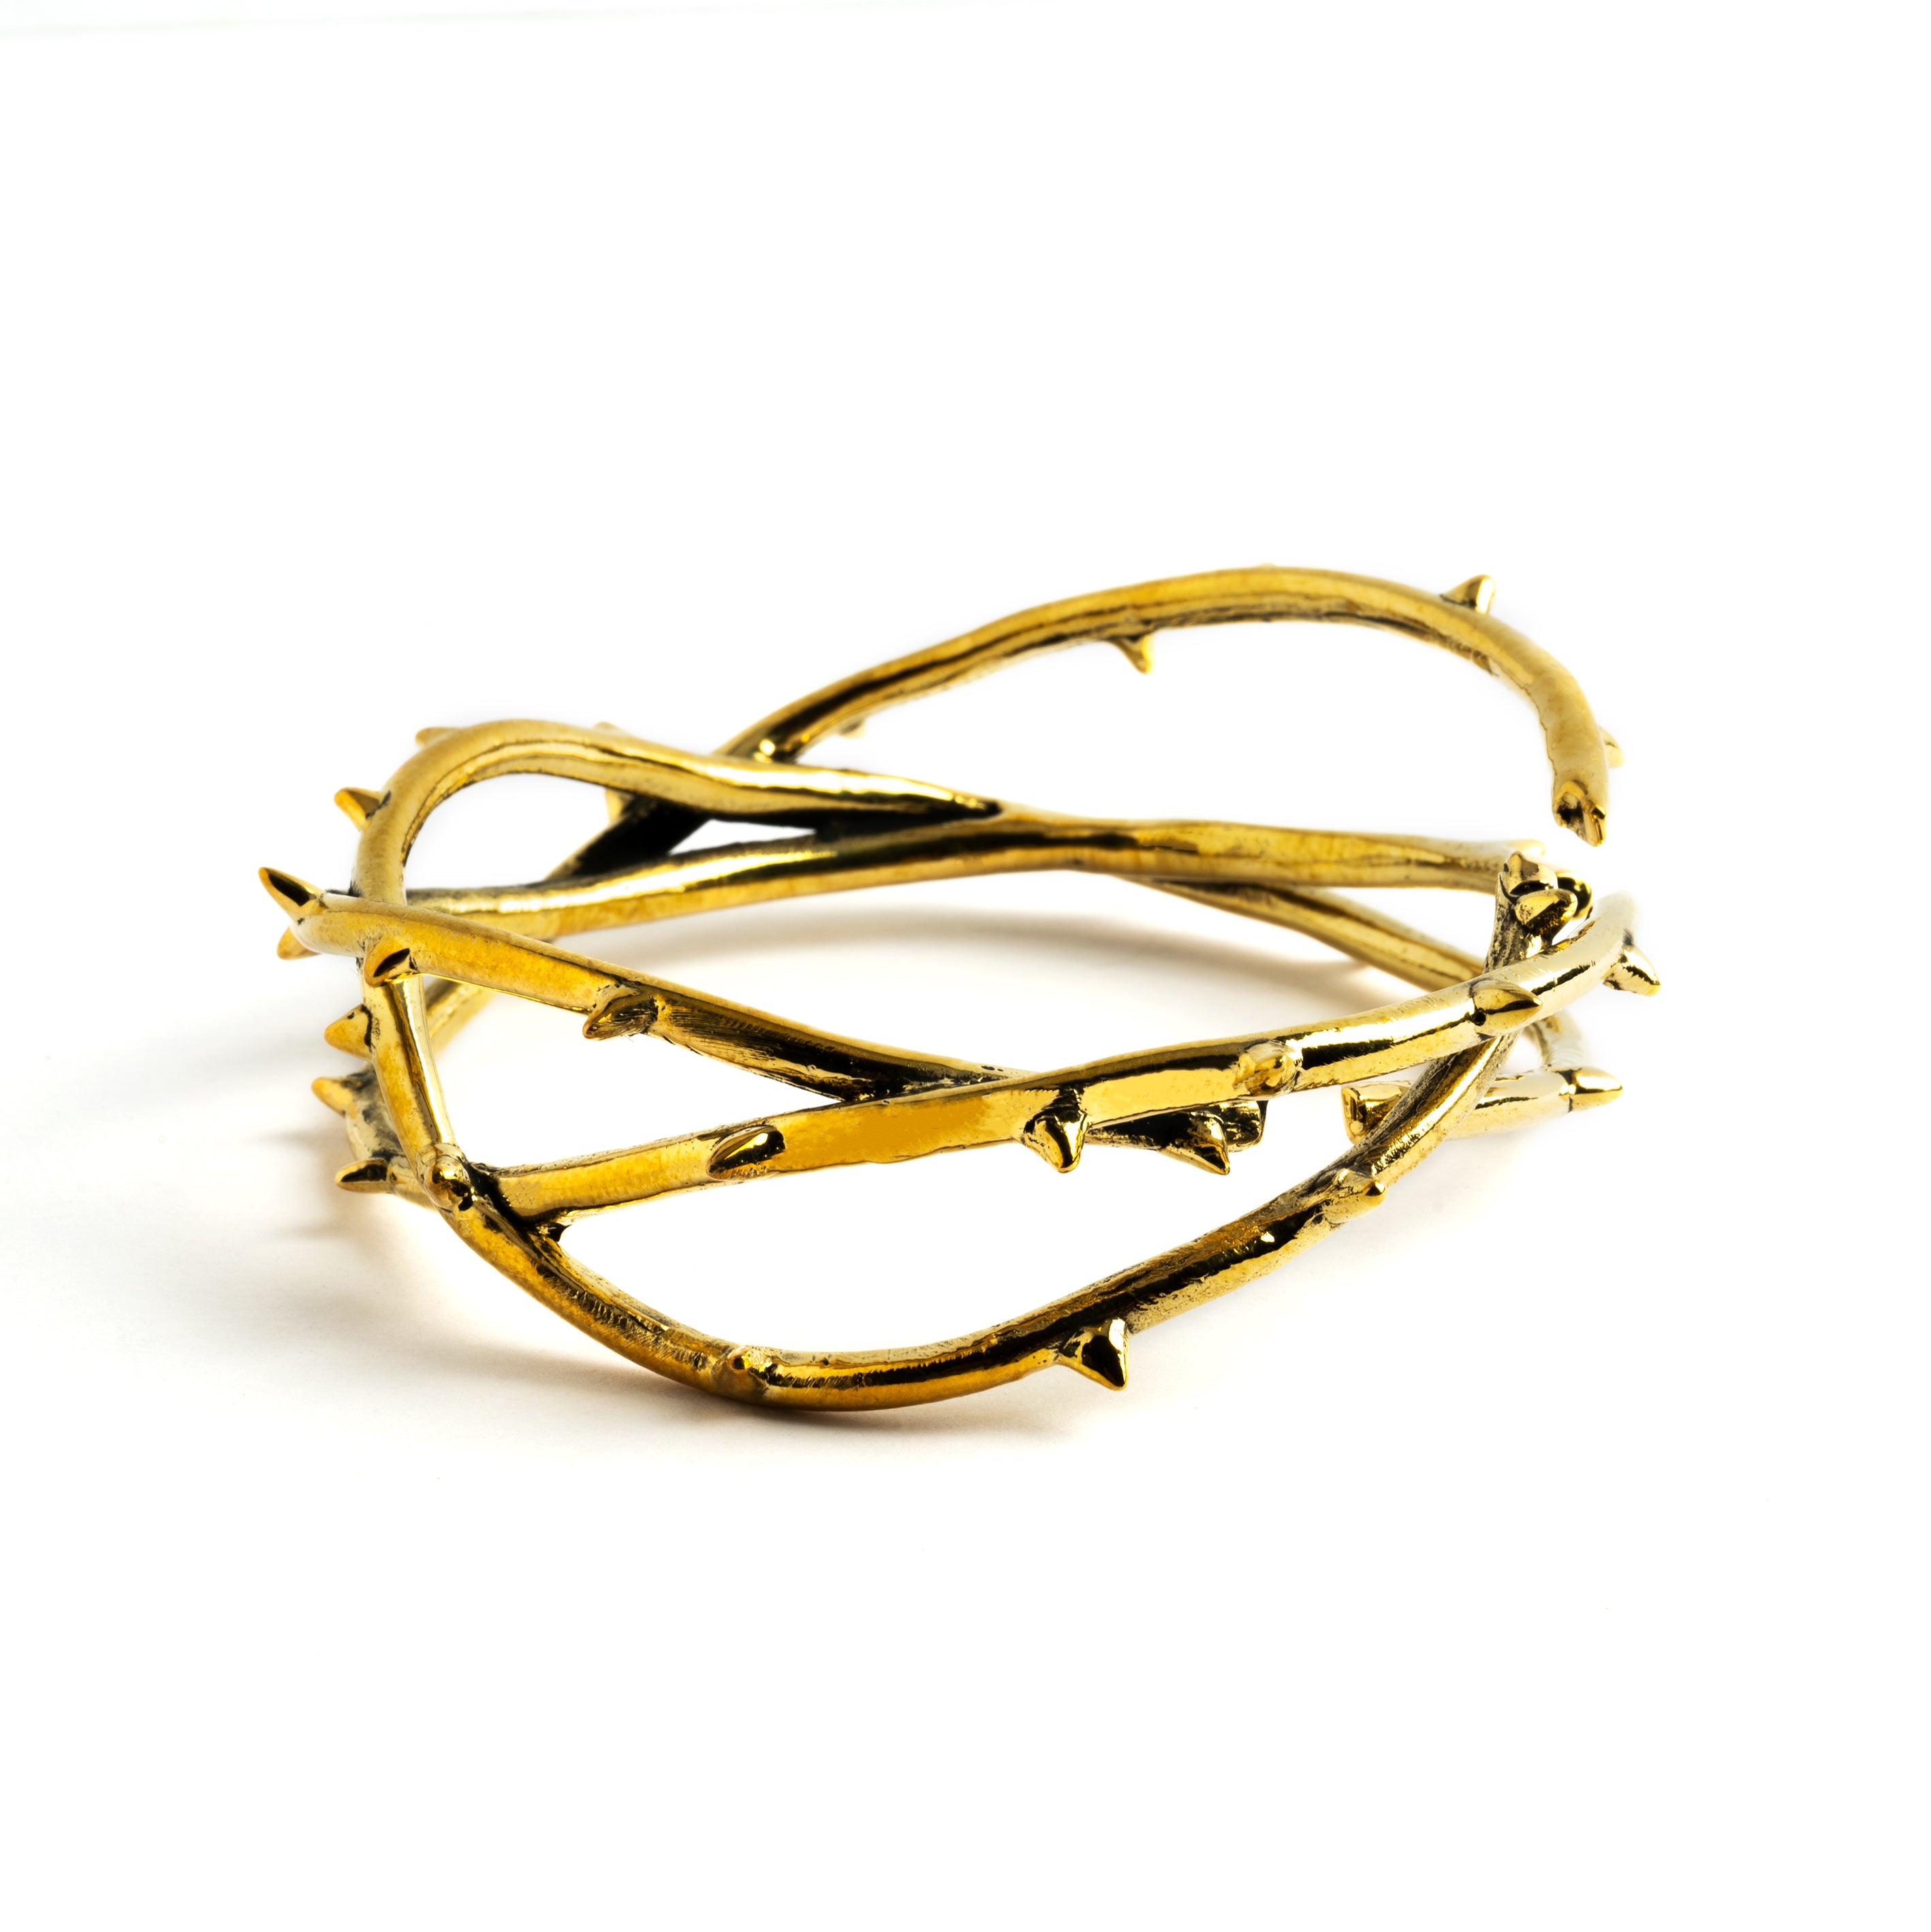 Golden-thorn-cuff-bracelet_4